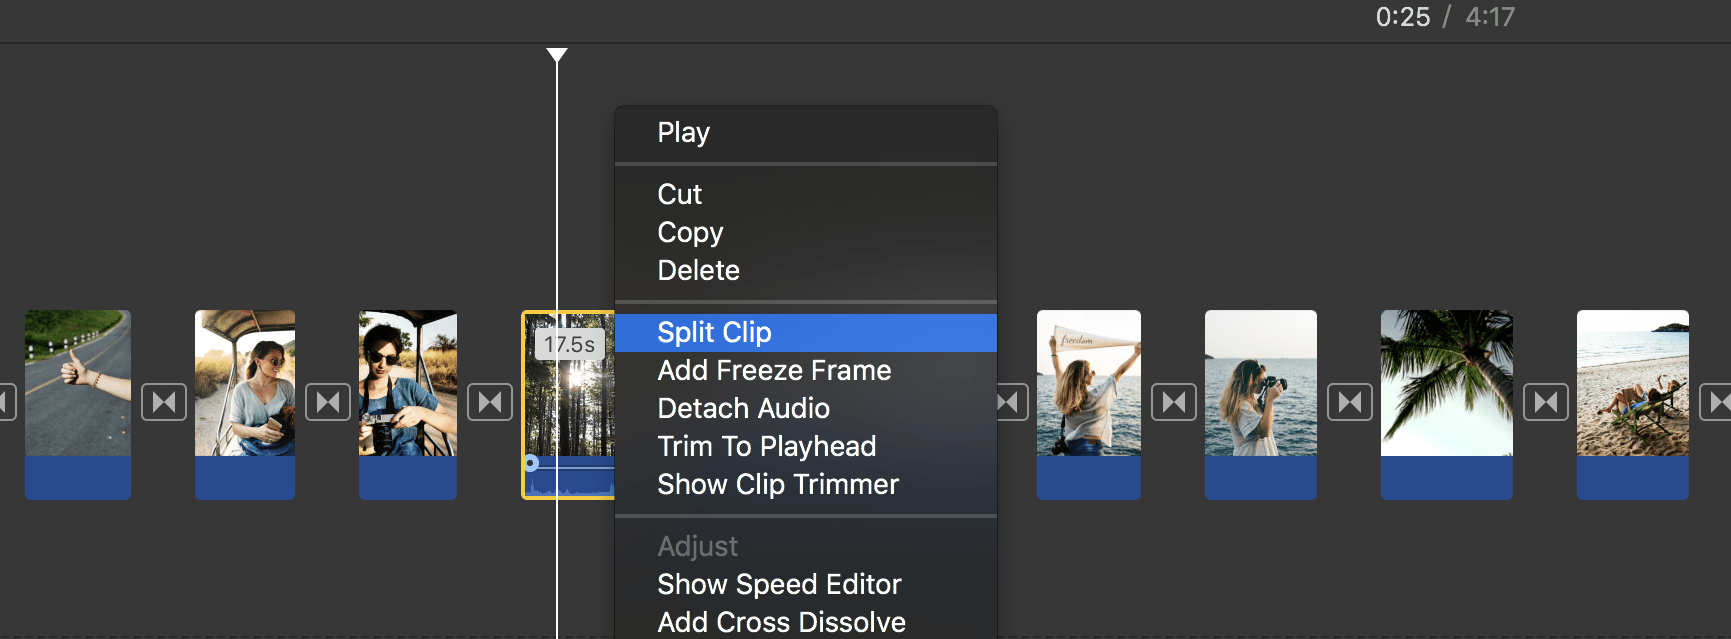 how to split screen on imovie mac